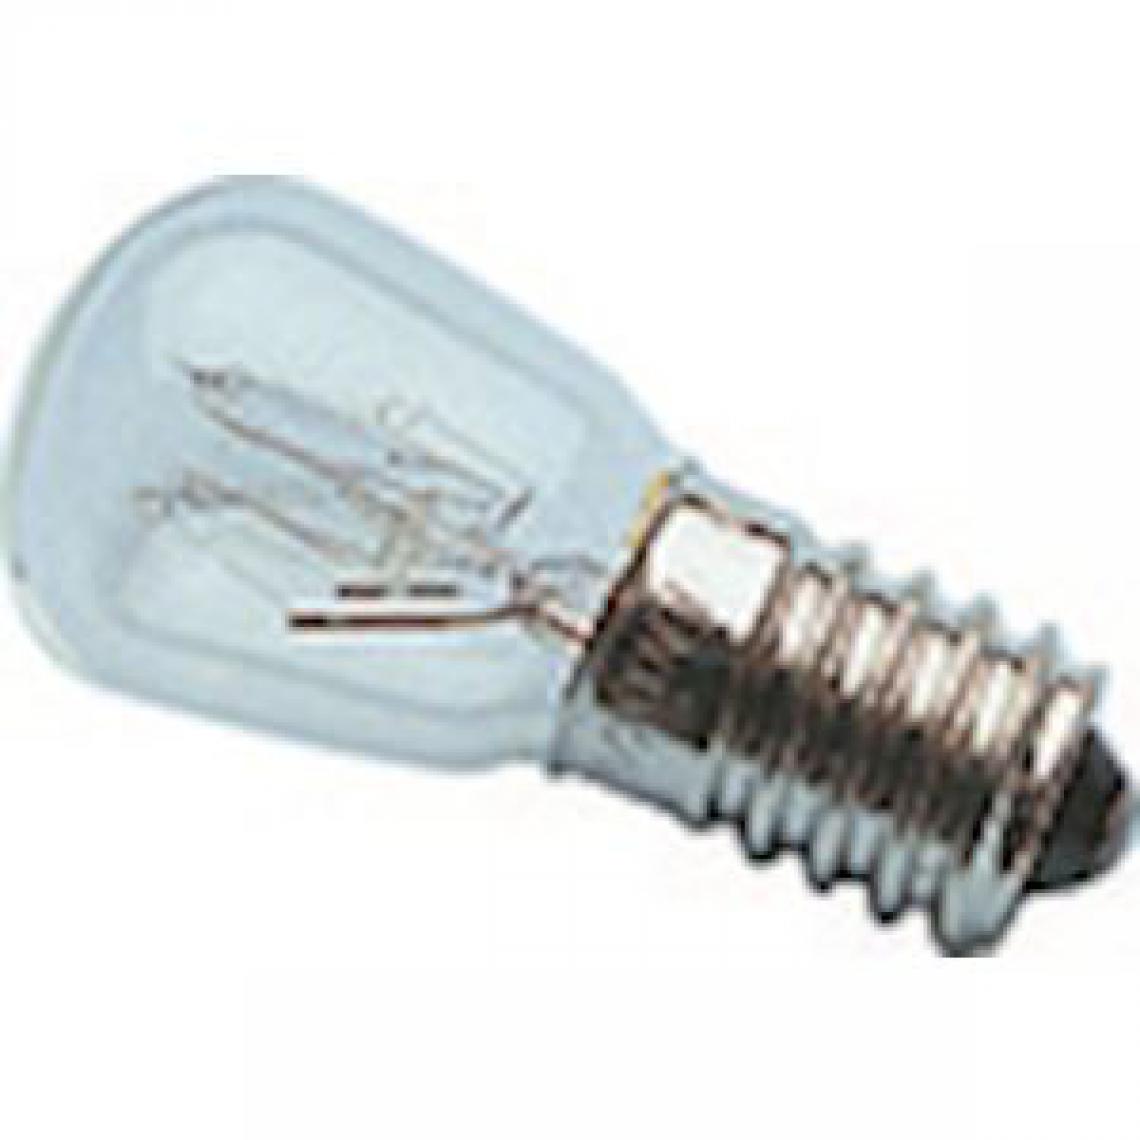 Orbitec - lampe miniature - e14 - 22 x 48 - 24 volts - 15 watts - orbitec 118835 - Ampoules LED